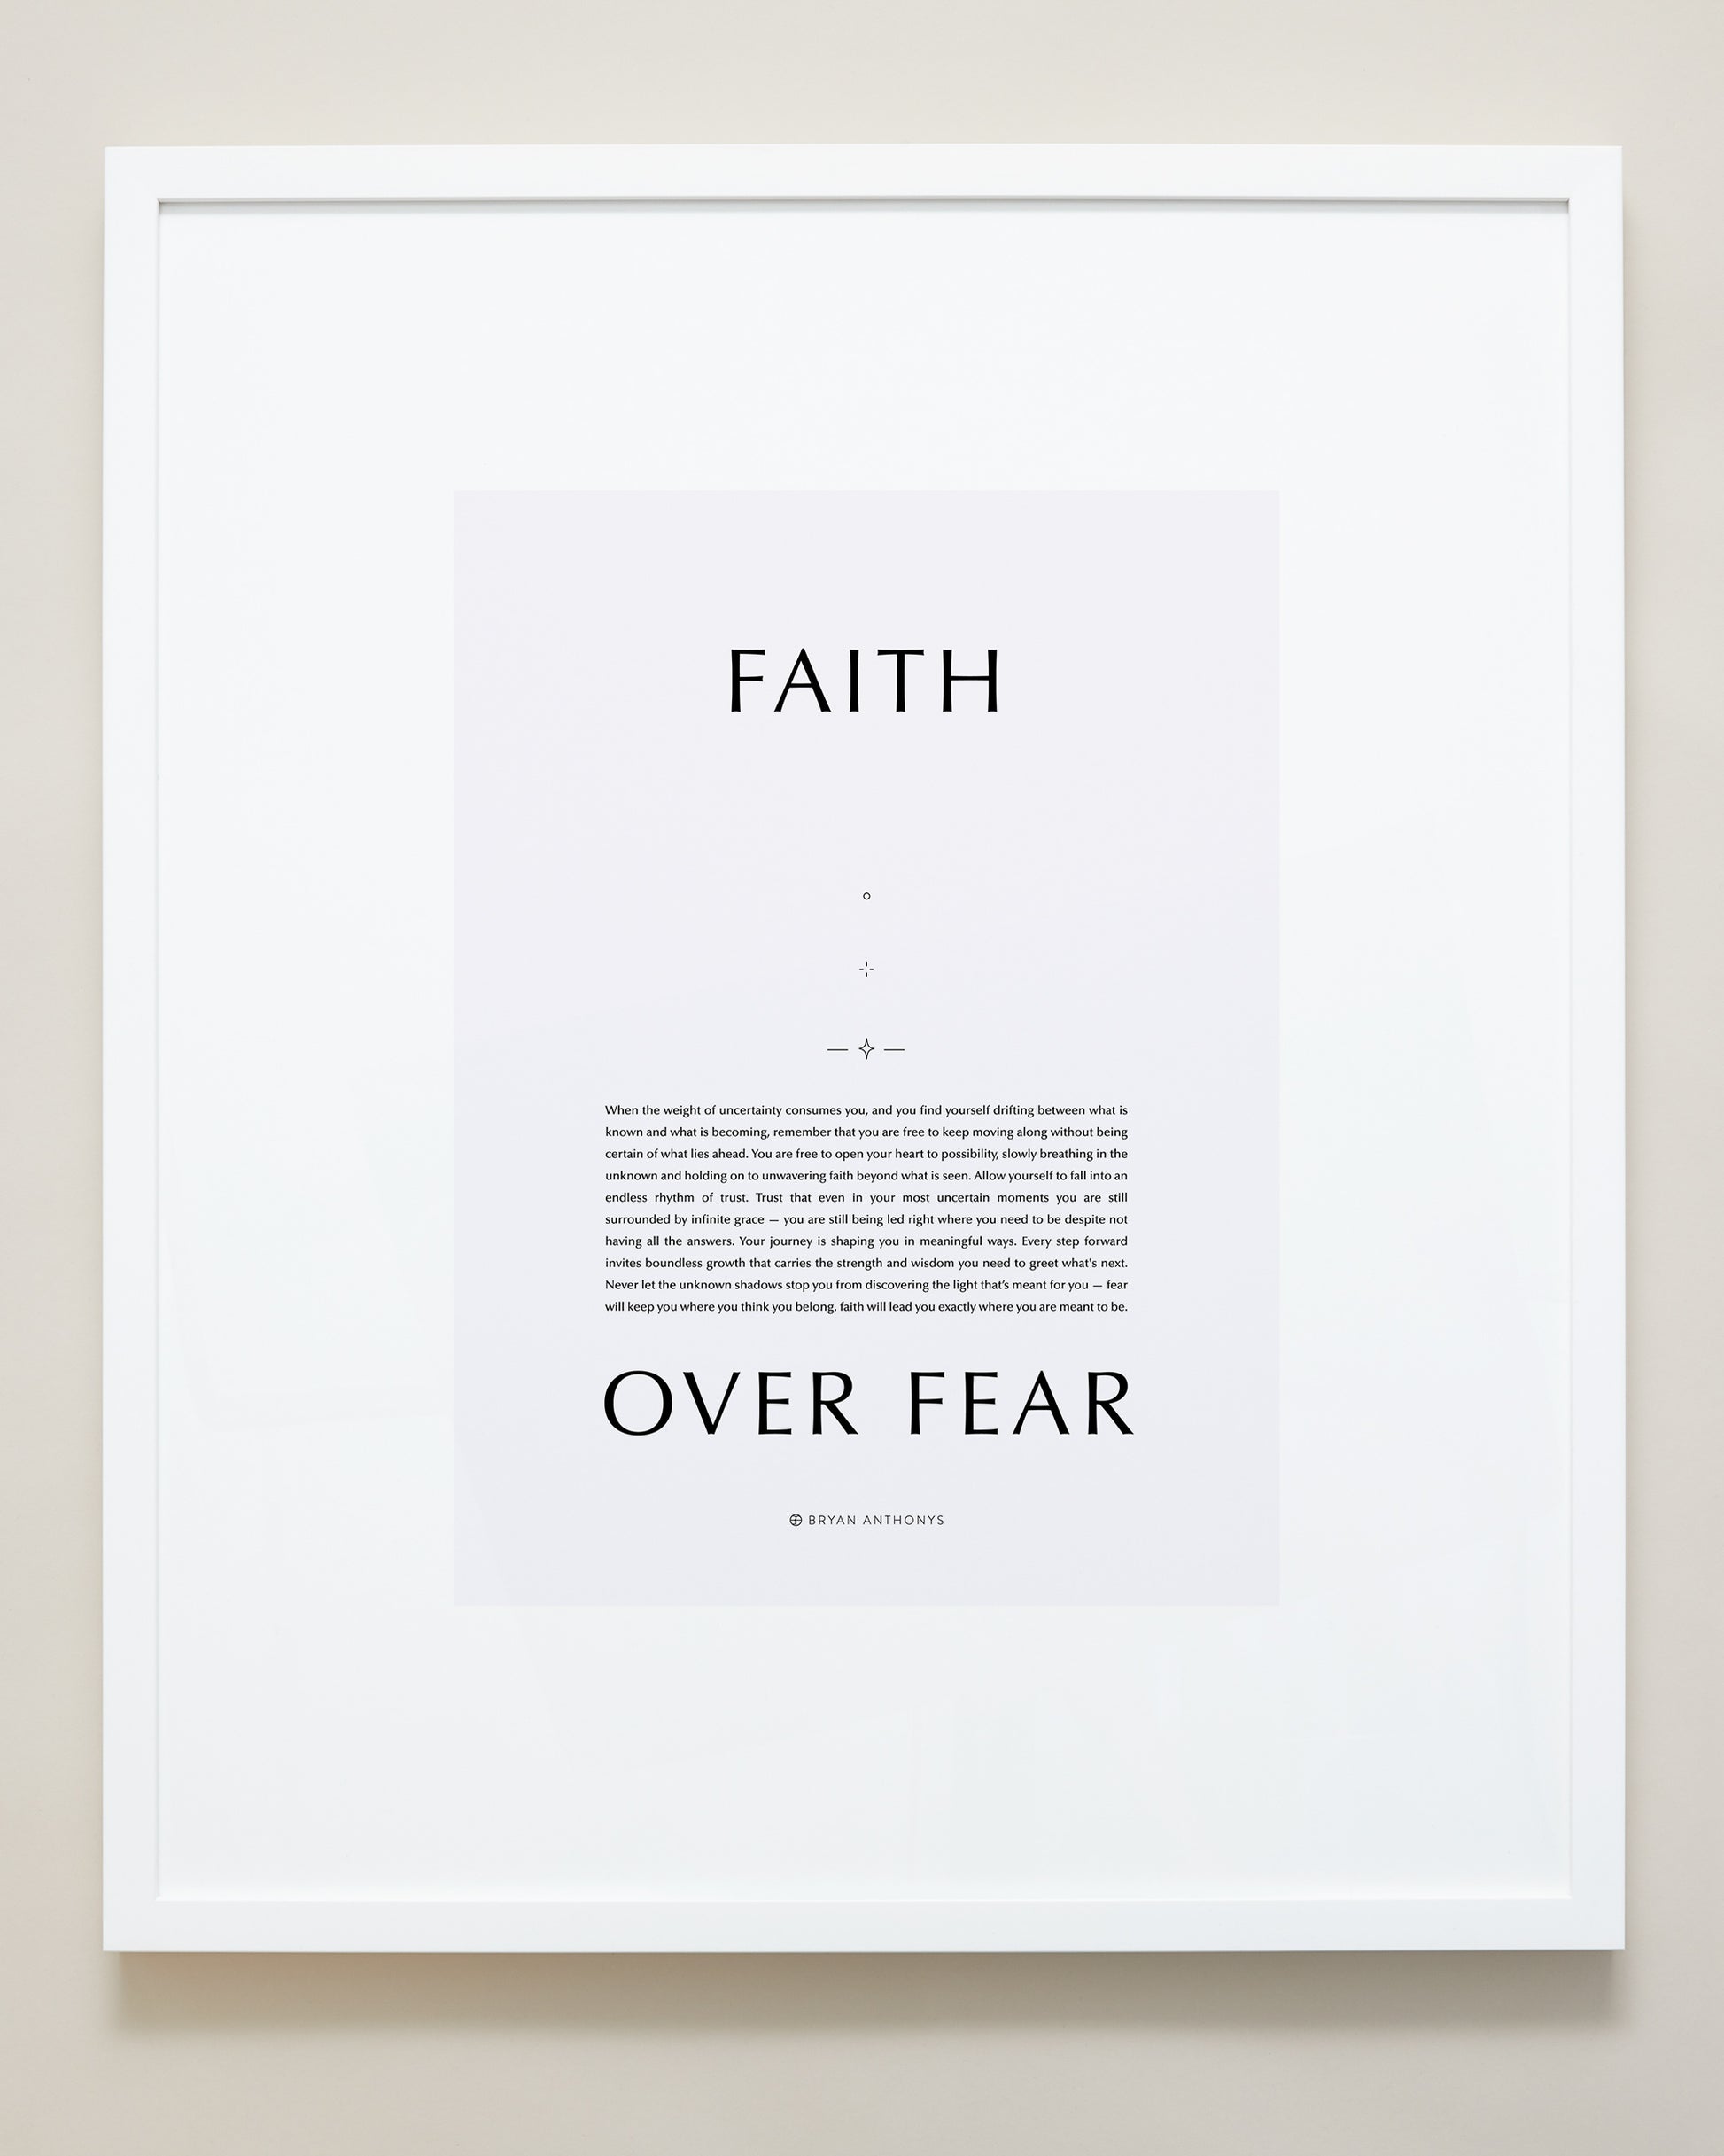 Bryan Anthonys Home Decor Purposeful Prints Faith Over Fear Iconic Framed Print Gray Art White Frame 20x24